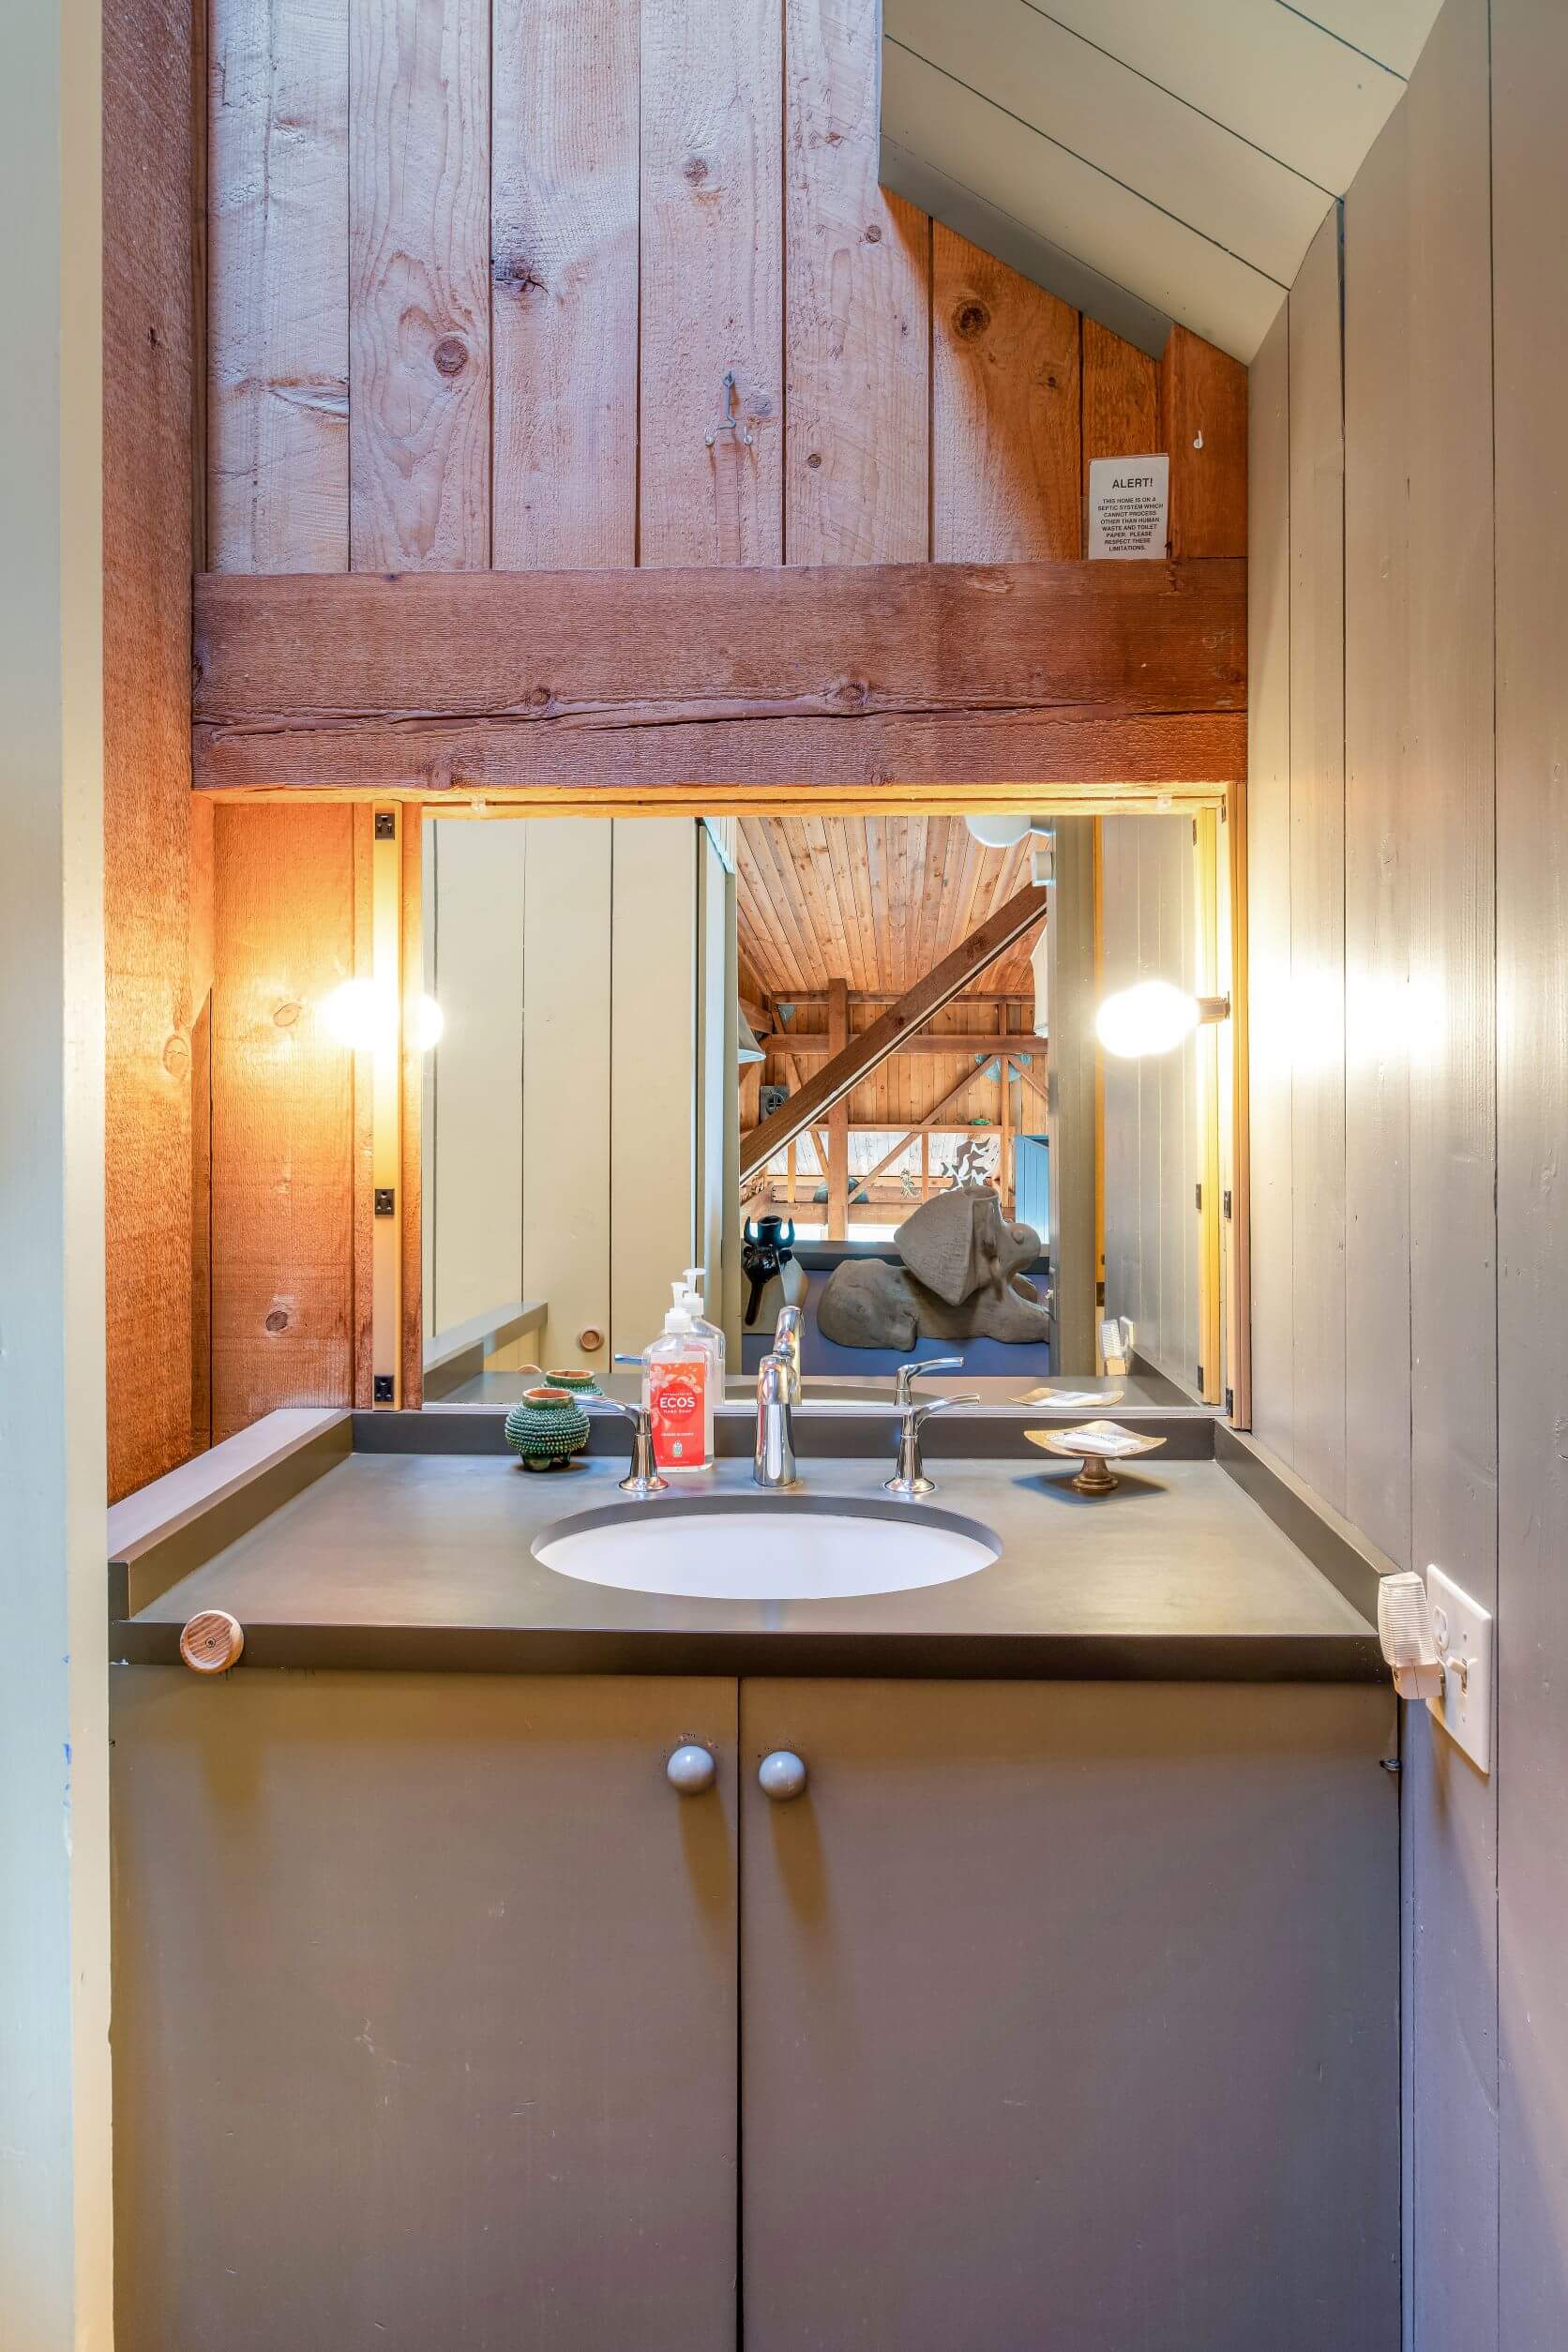 Moore Condo #9 - small bathroom with sink and mirror.